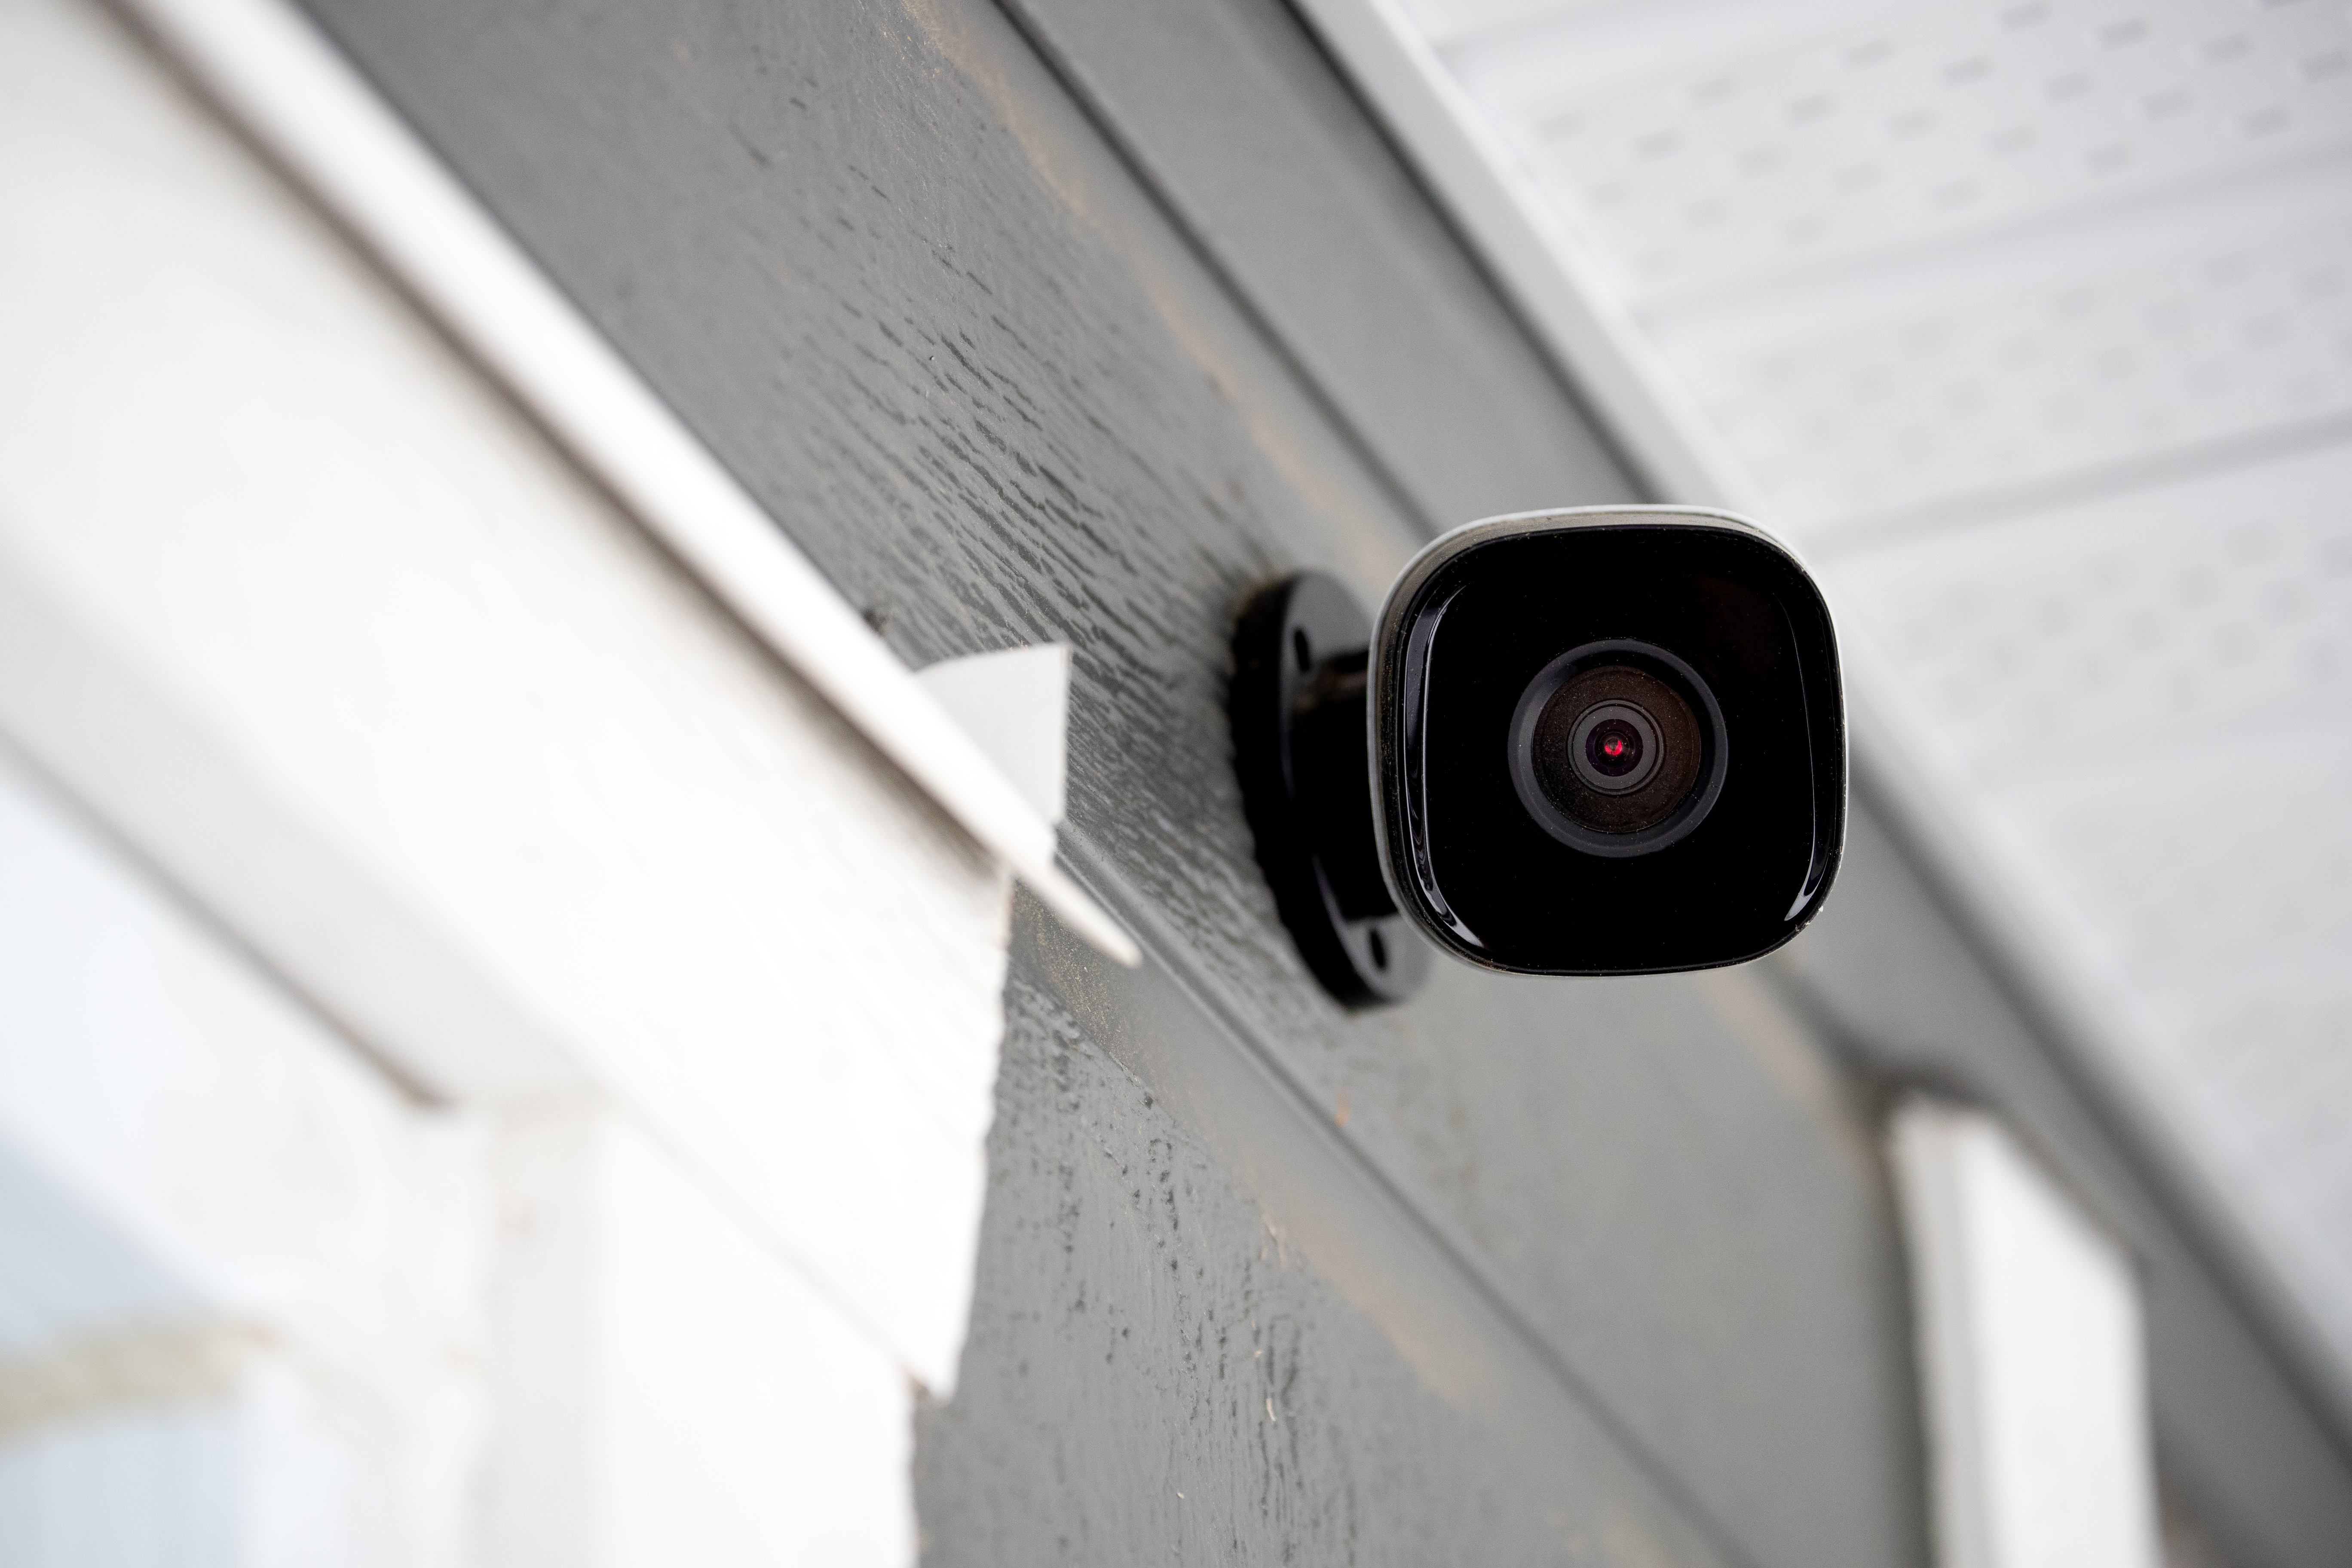 Cómo detectar cámaras de video ocultas